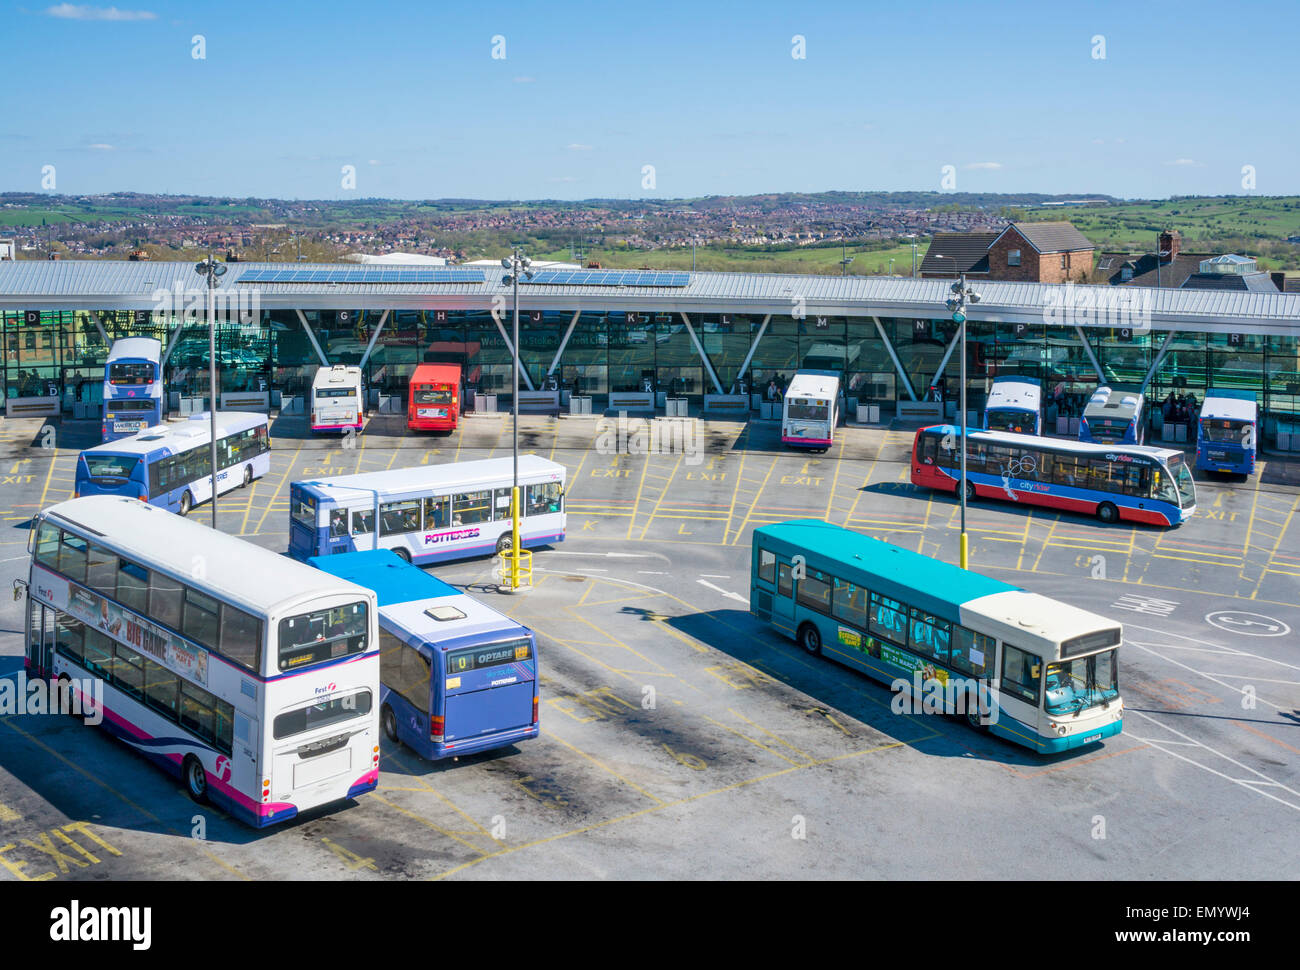 City Centre Bus Station Stoke on Trent Staffordshire England GB UK EU Europe Stock Photo